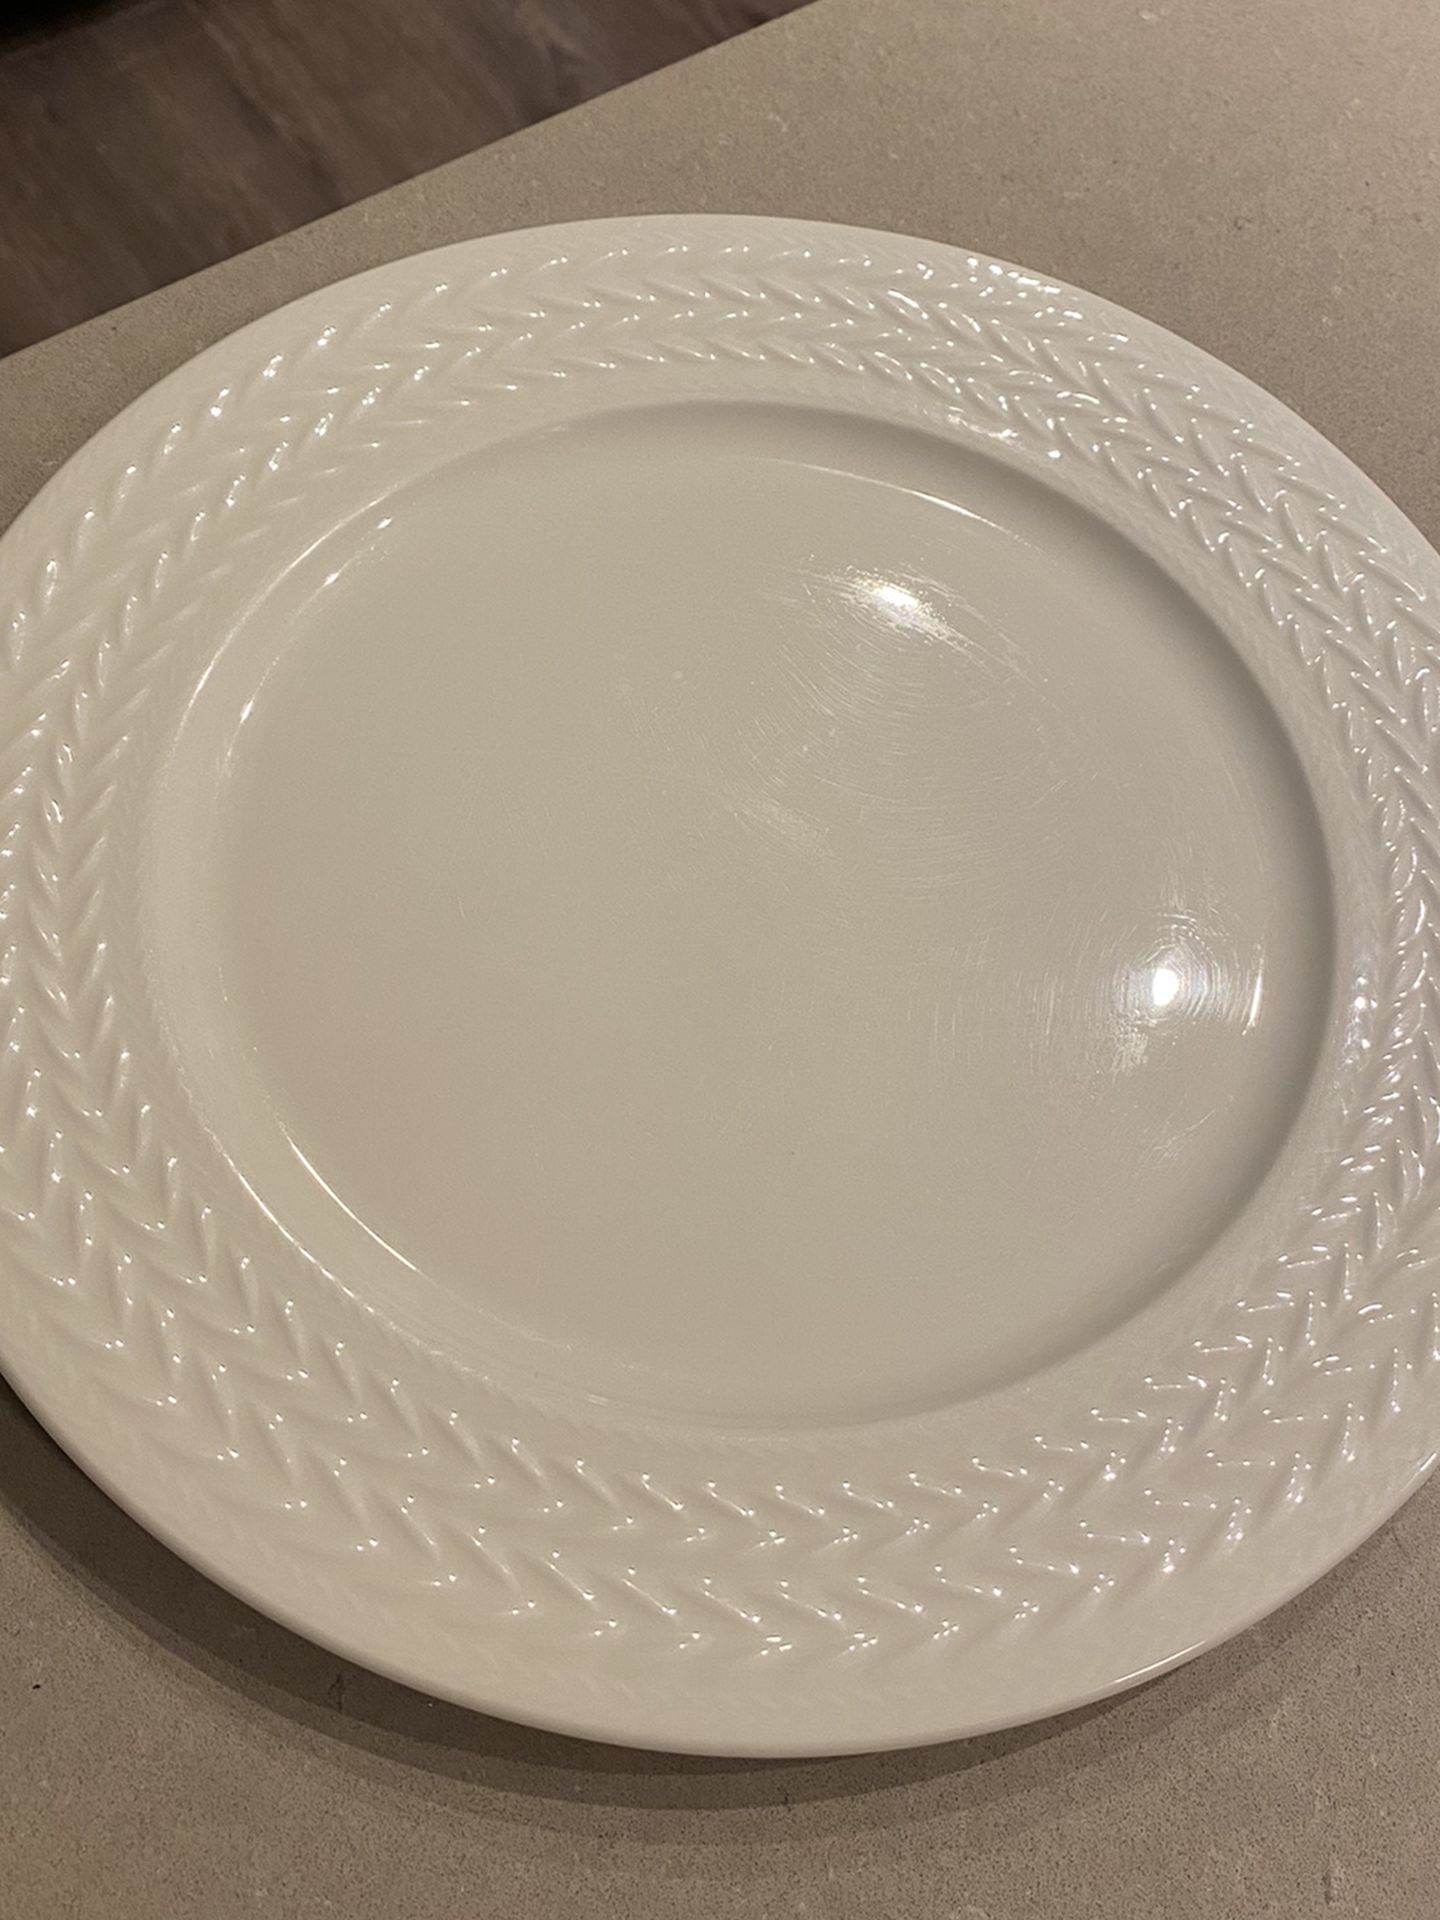 XL ceramic plates and bowls (4 plates and 4 bowls)